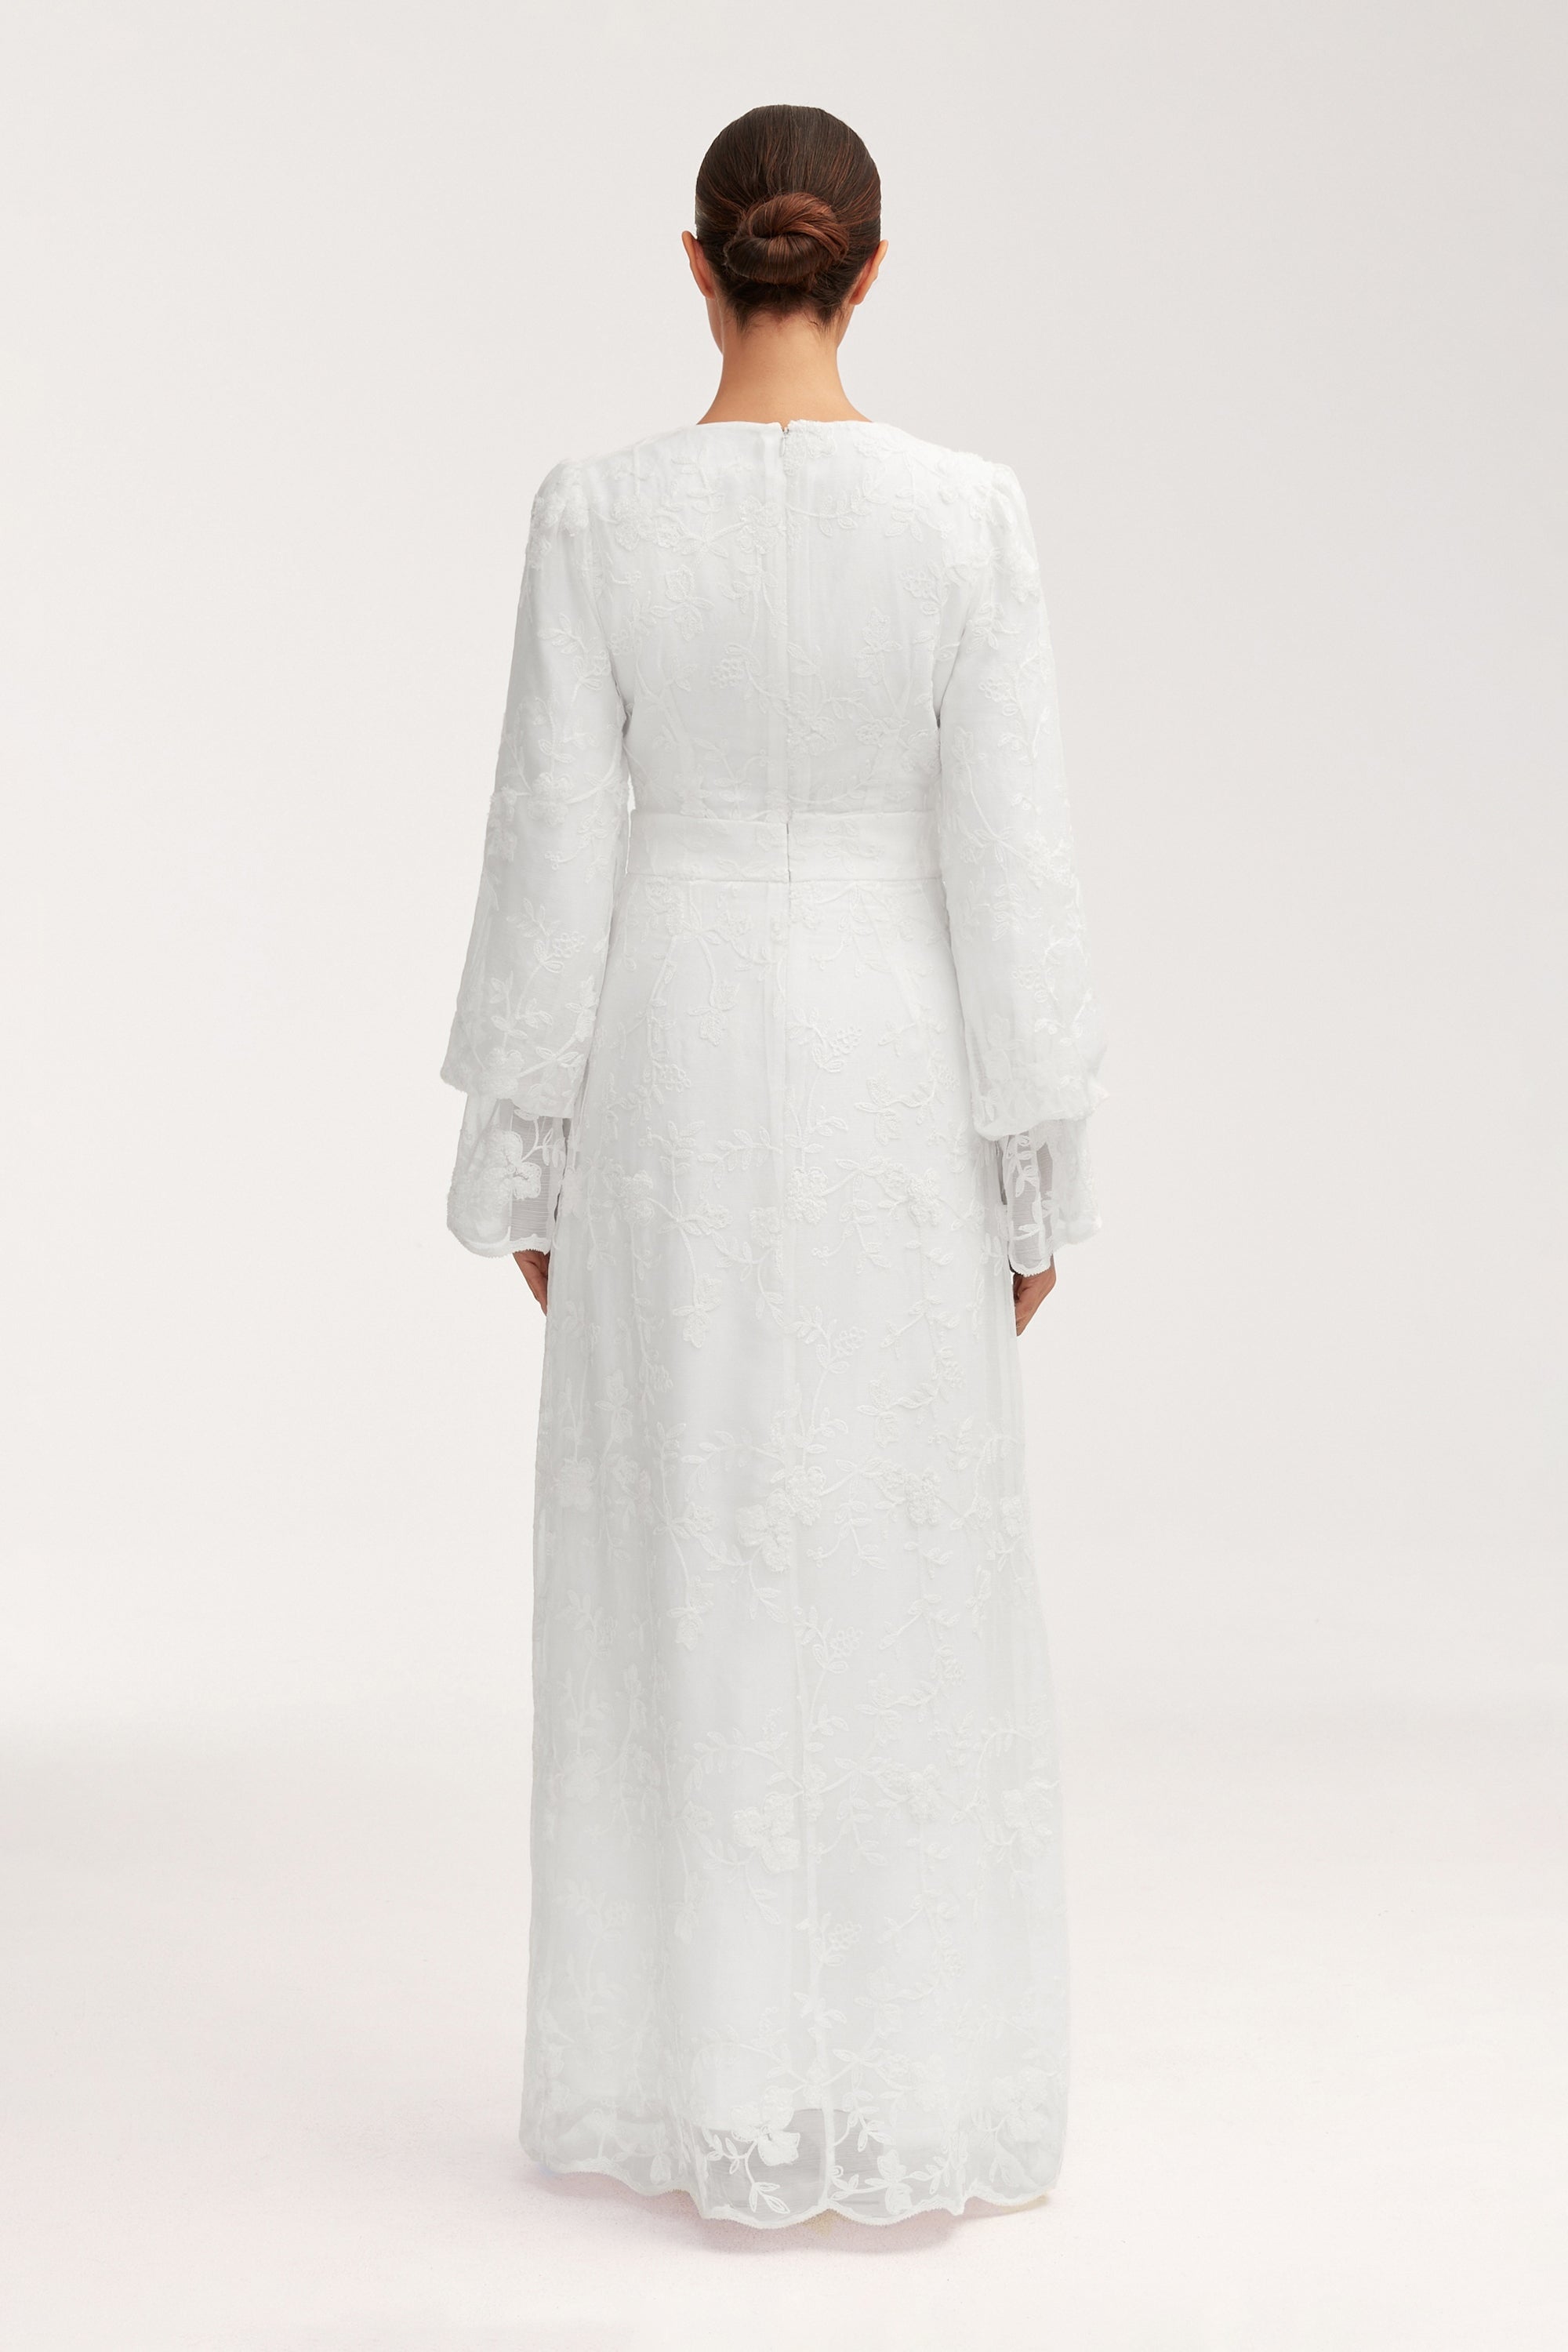 Romaissa White Lace Maxi Dress Clothing epschoolboard 